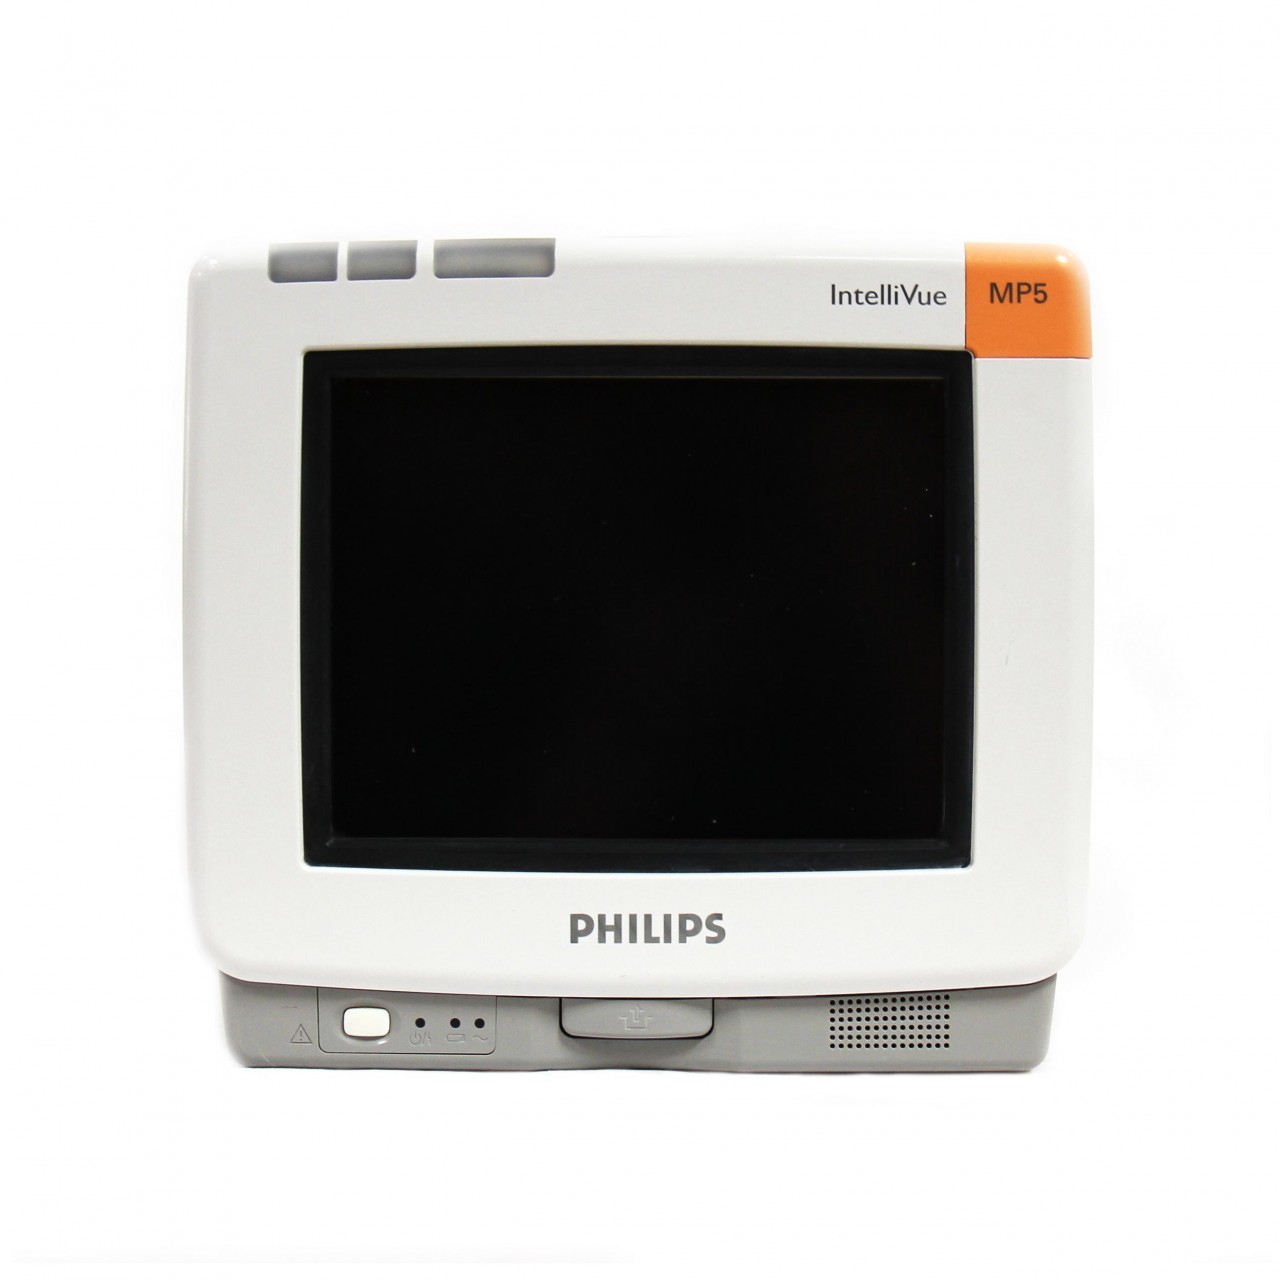 Monitor Philips Intellivue MP5